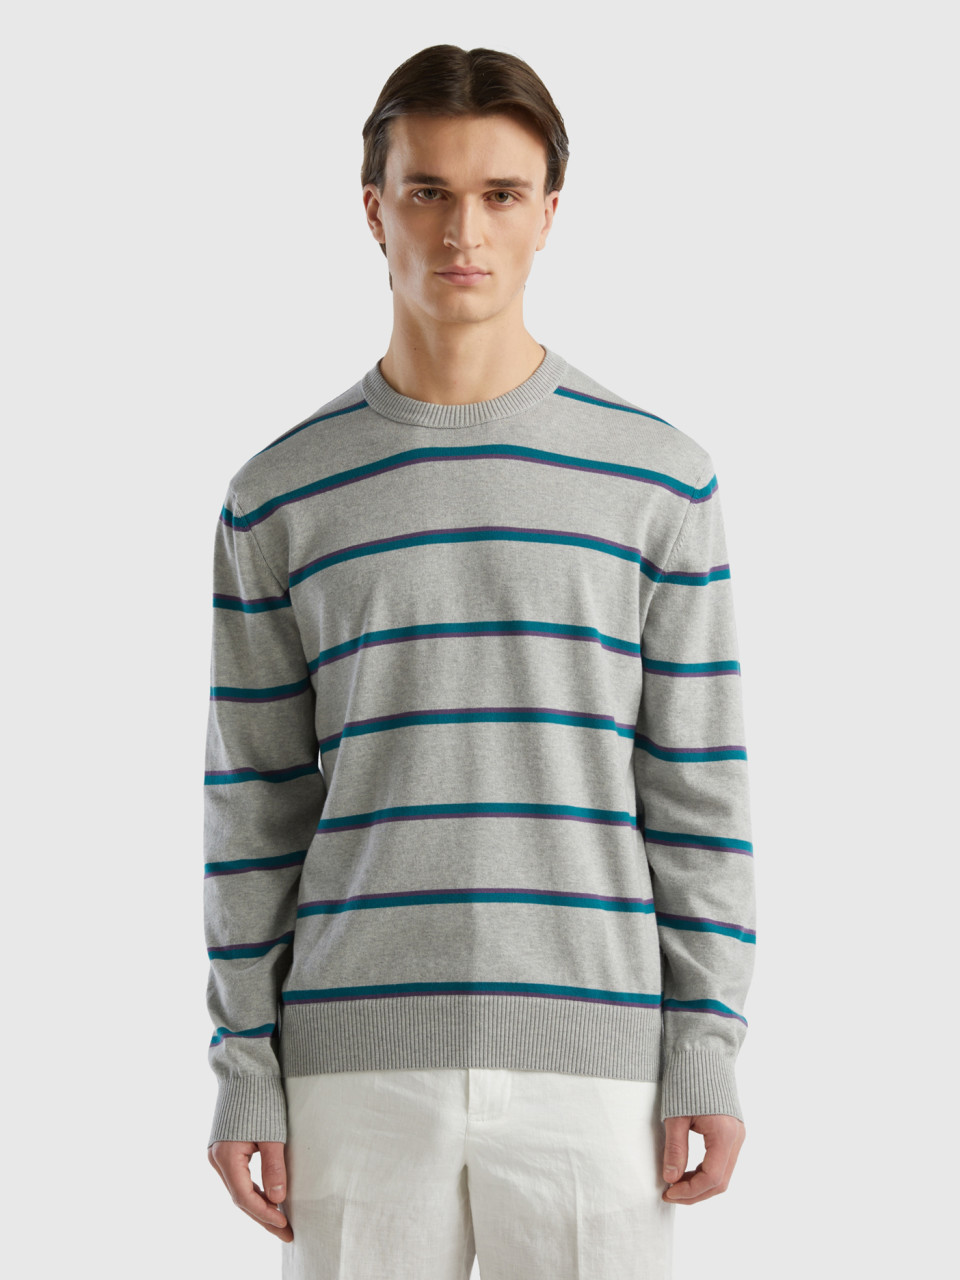 Benetton, Striped 100% Cotton Sweater, Light Gray, Men